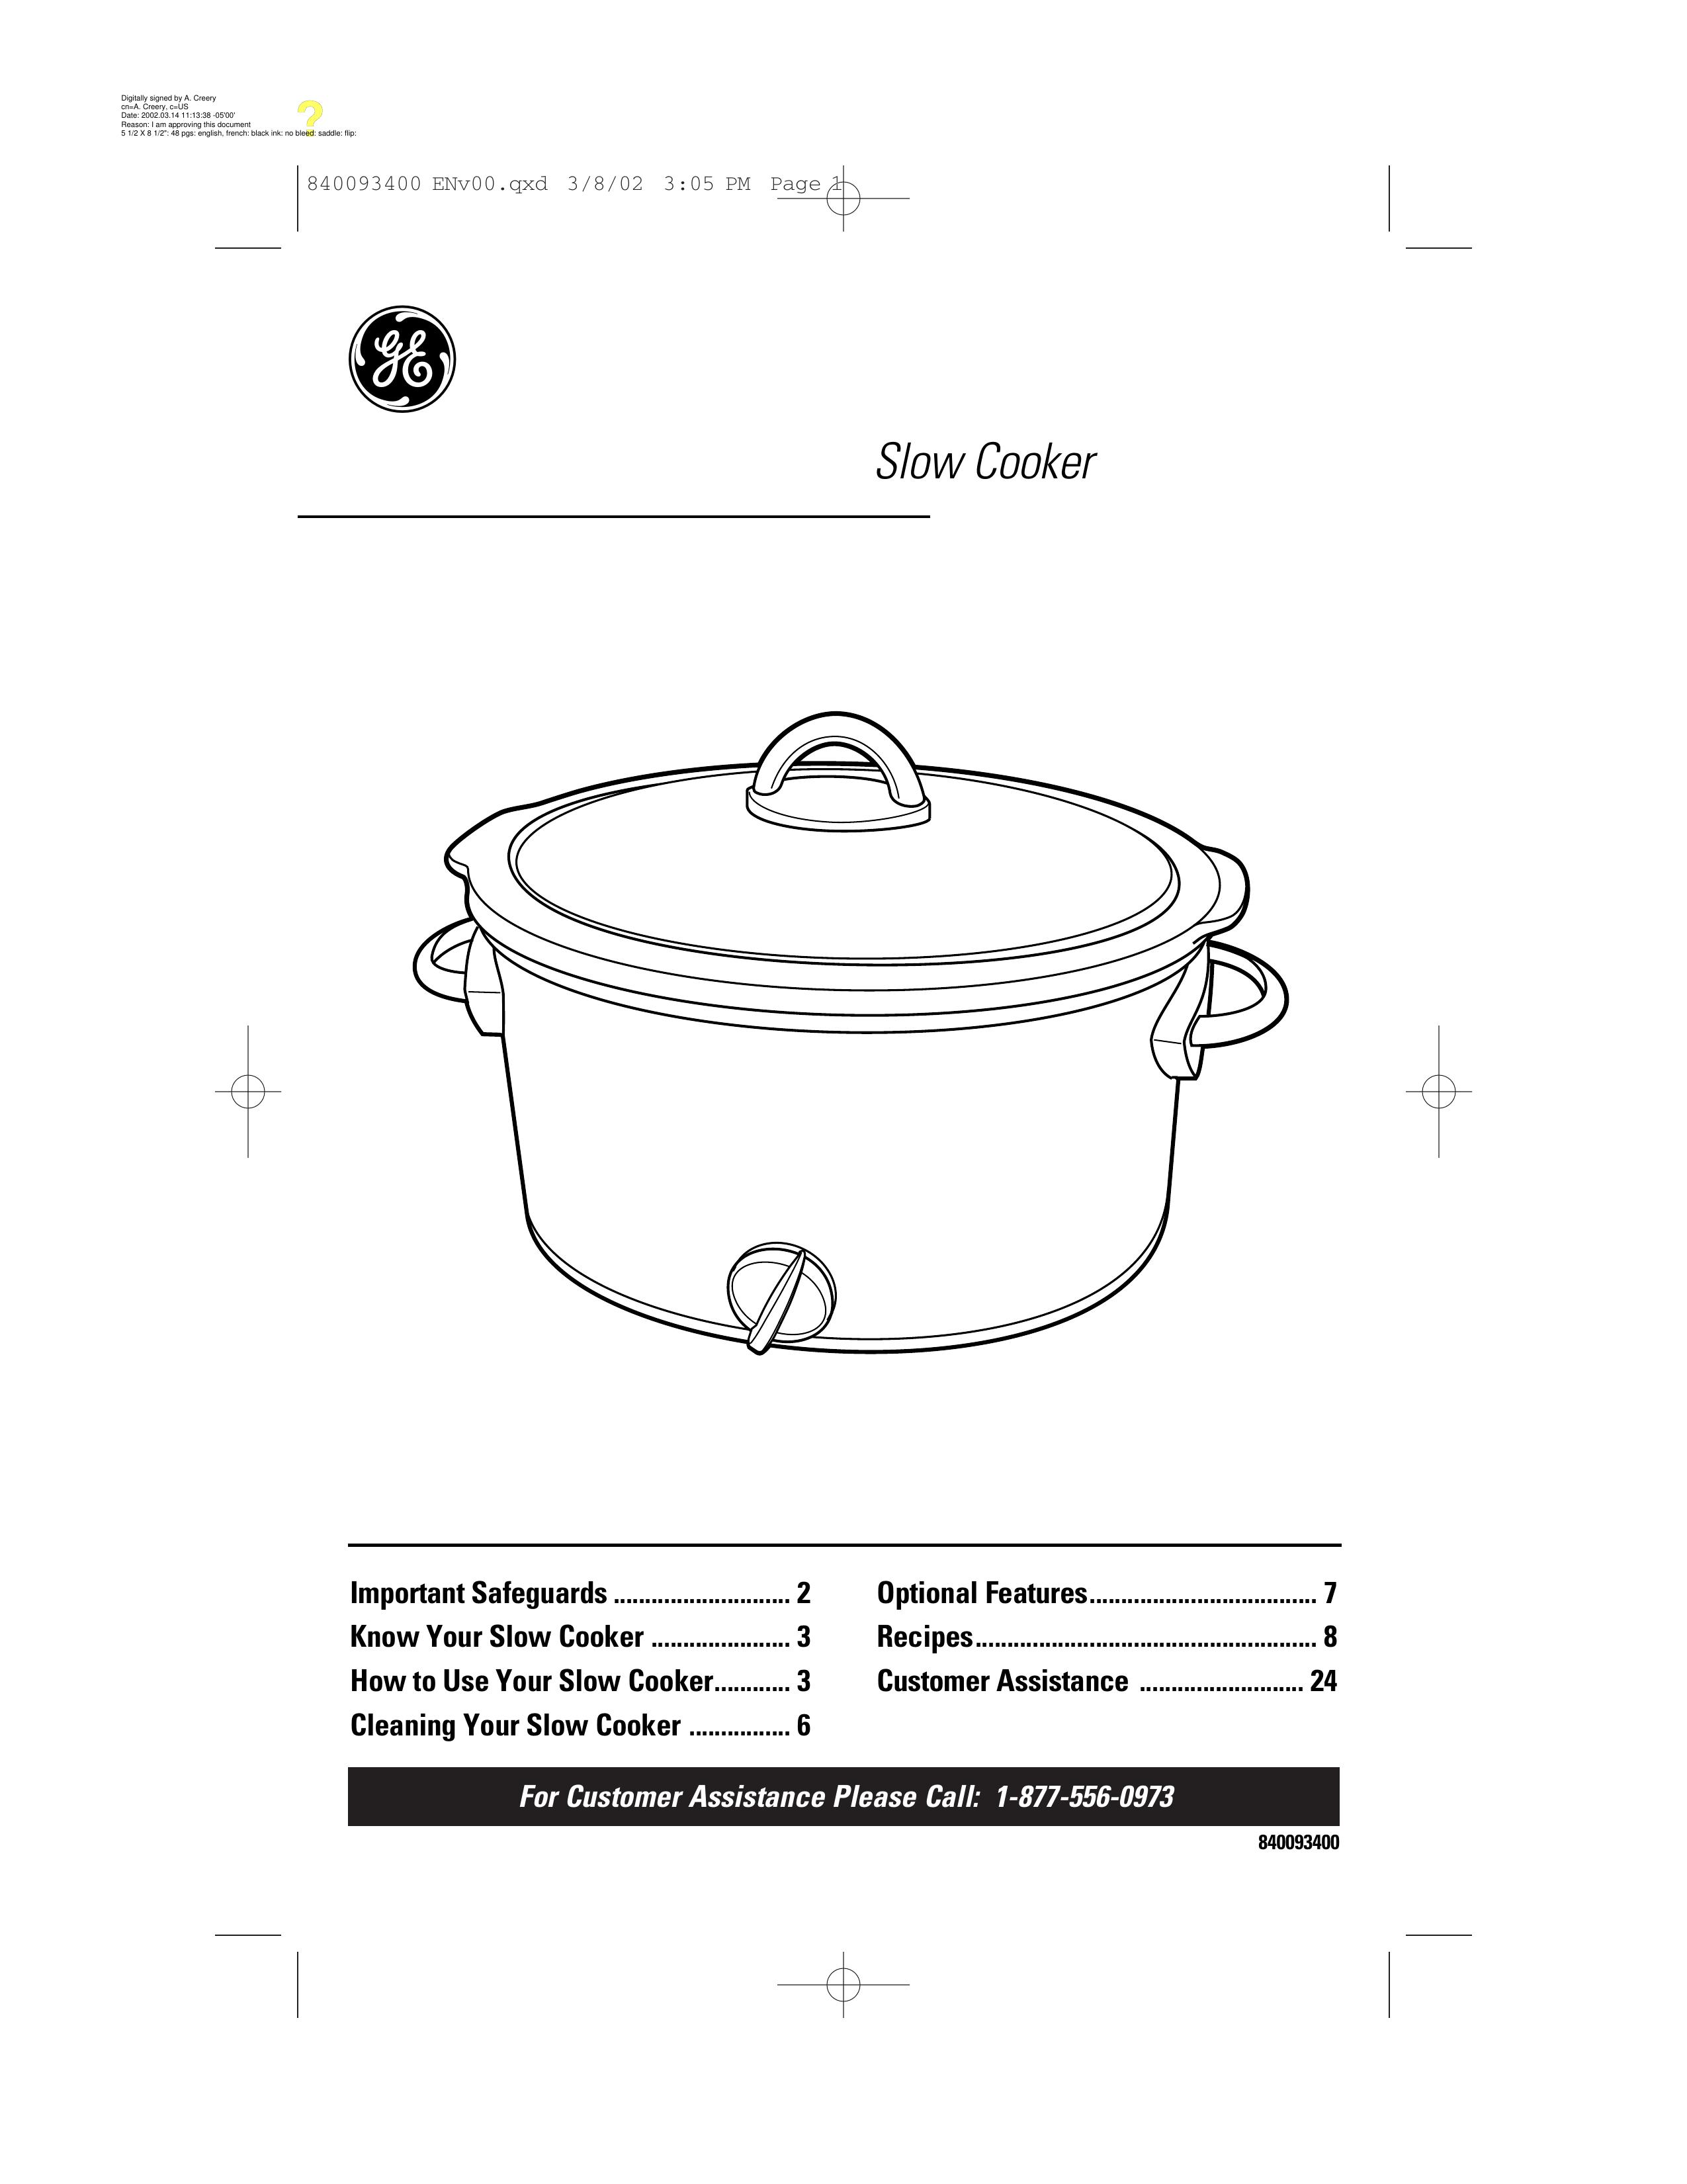 GE 106724 Slow Cooker User Manual